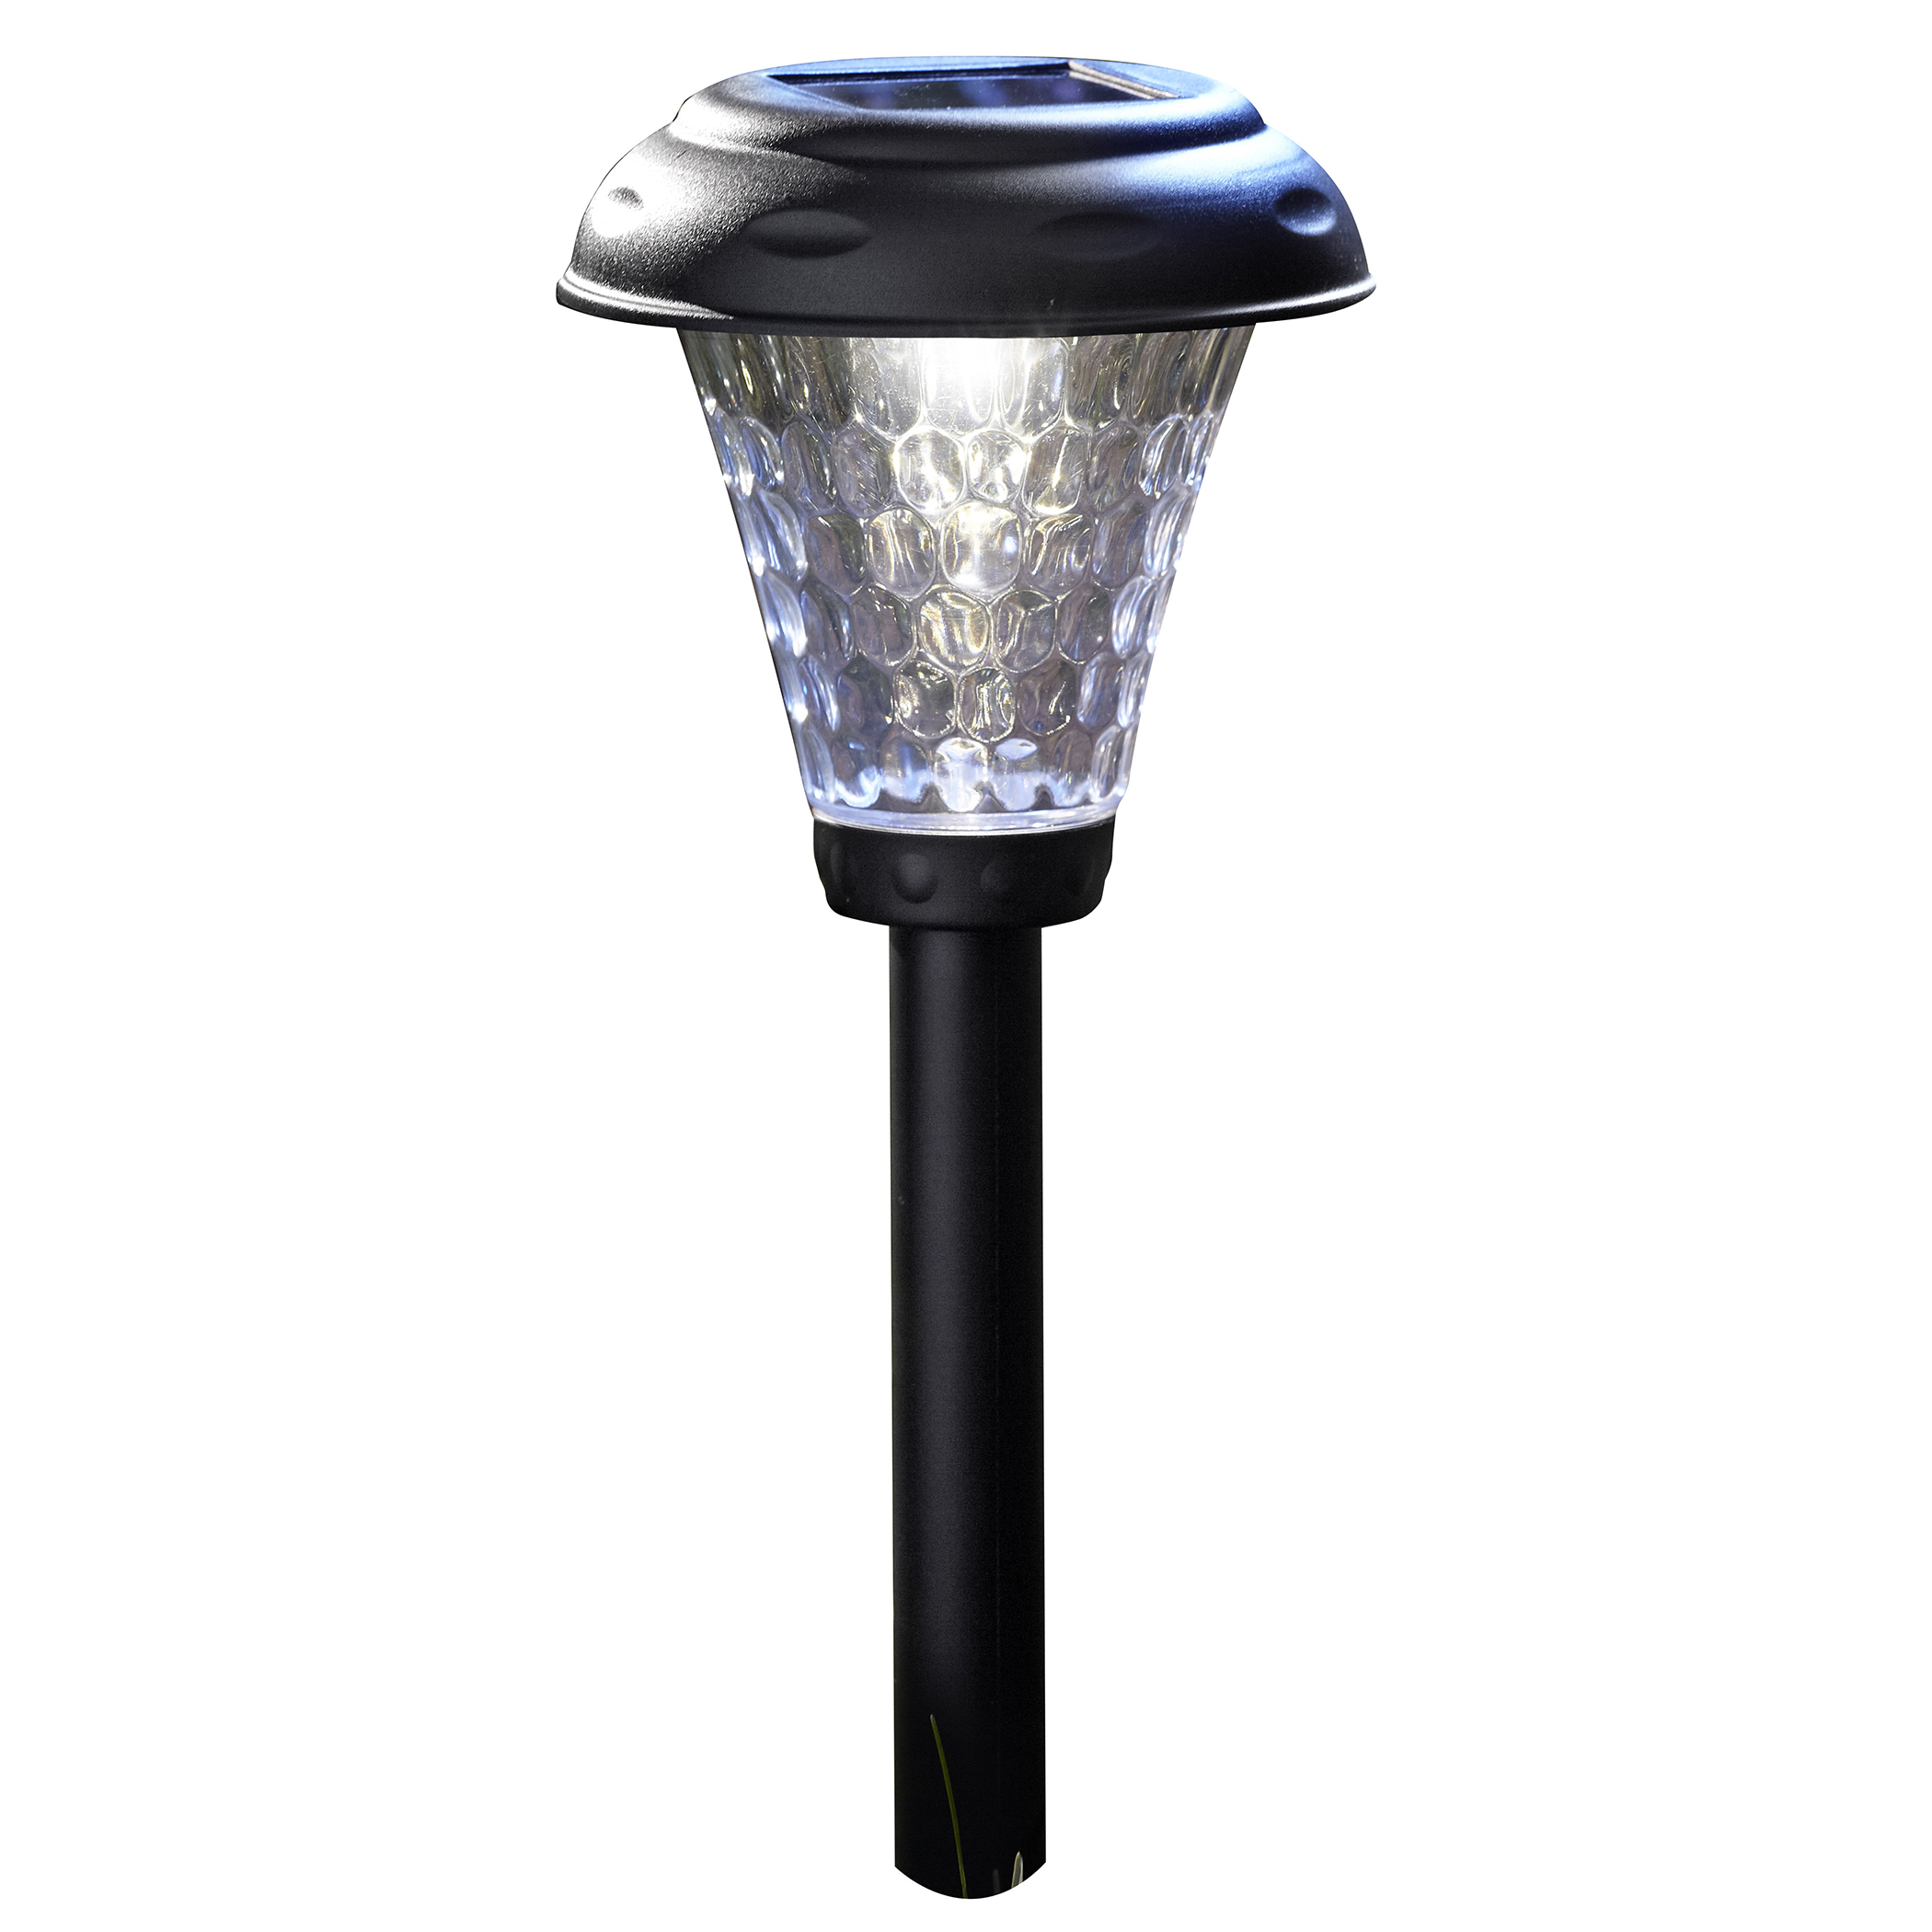 Moonrays 91381 Black Payton Solar LED Plastic Path Light, Hammered Glass Look, provides 360 Display of Warm LED Lighting, 8-Pack - image 1 of 2